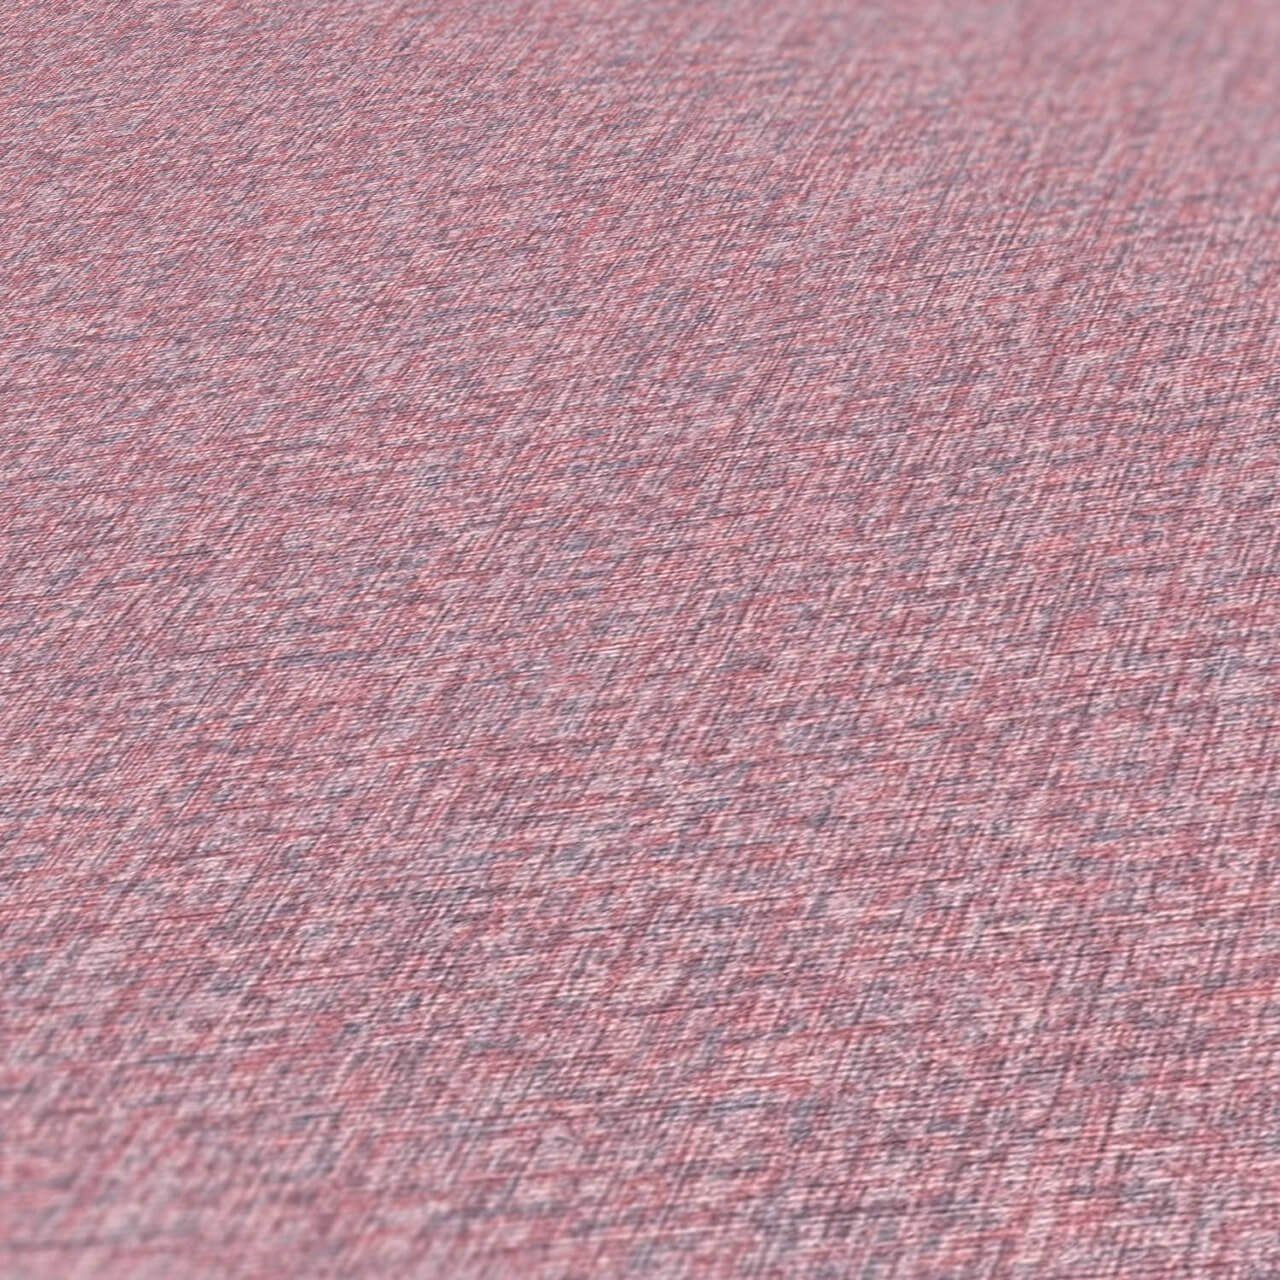 Scenic m, KUNSTLOFT 0.53x10.05 rosa Splendor Vliestapete Design matt, blau, lichtbeständige Tapete